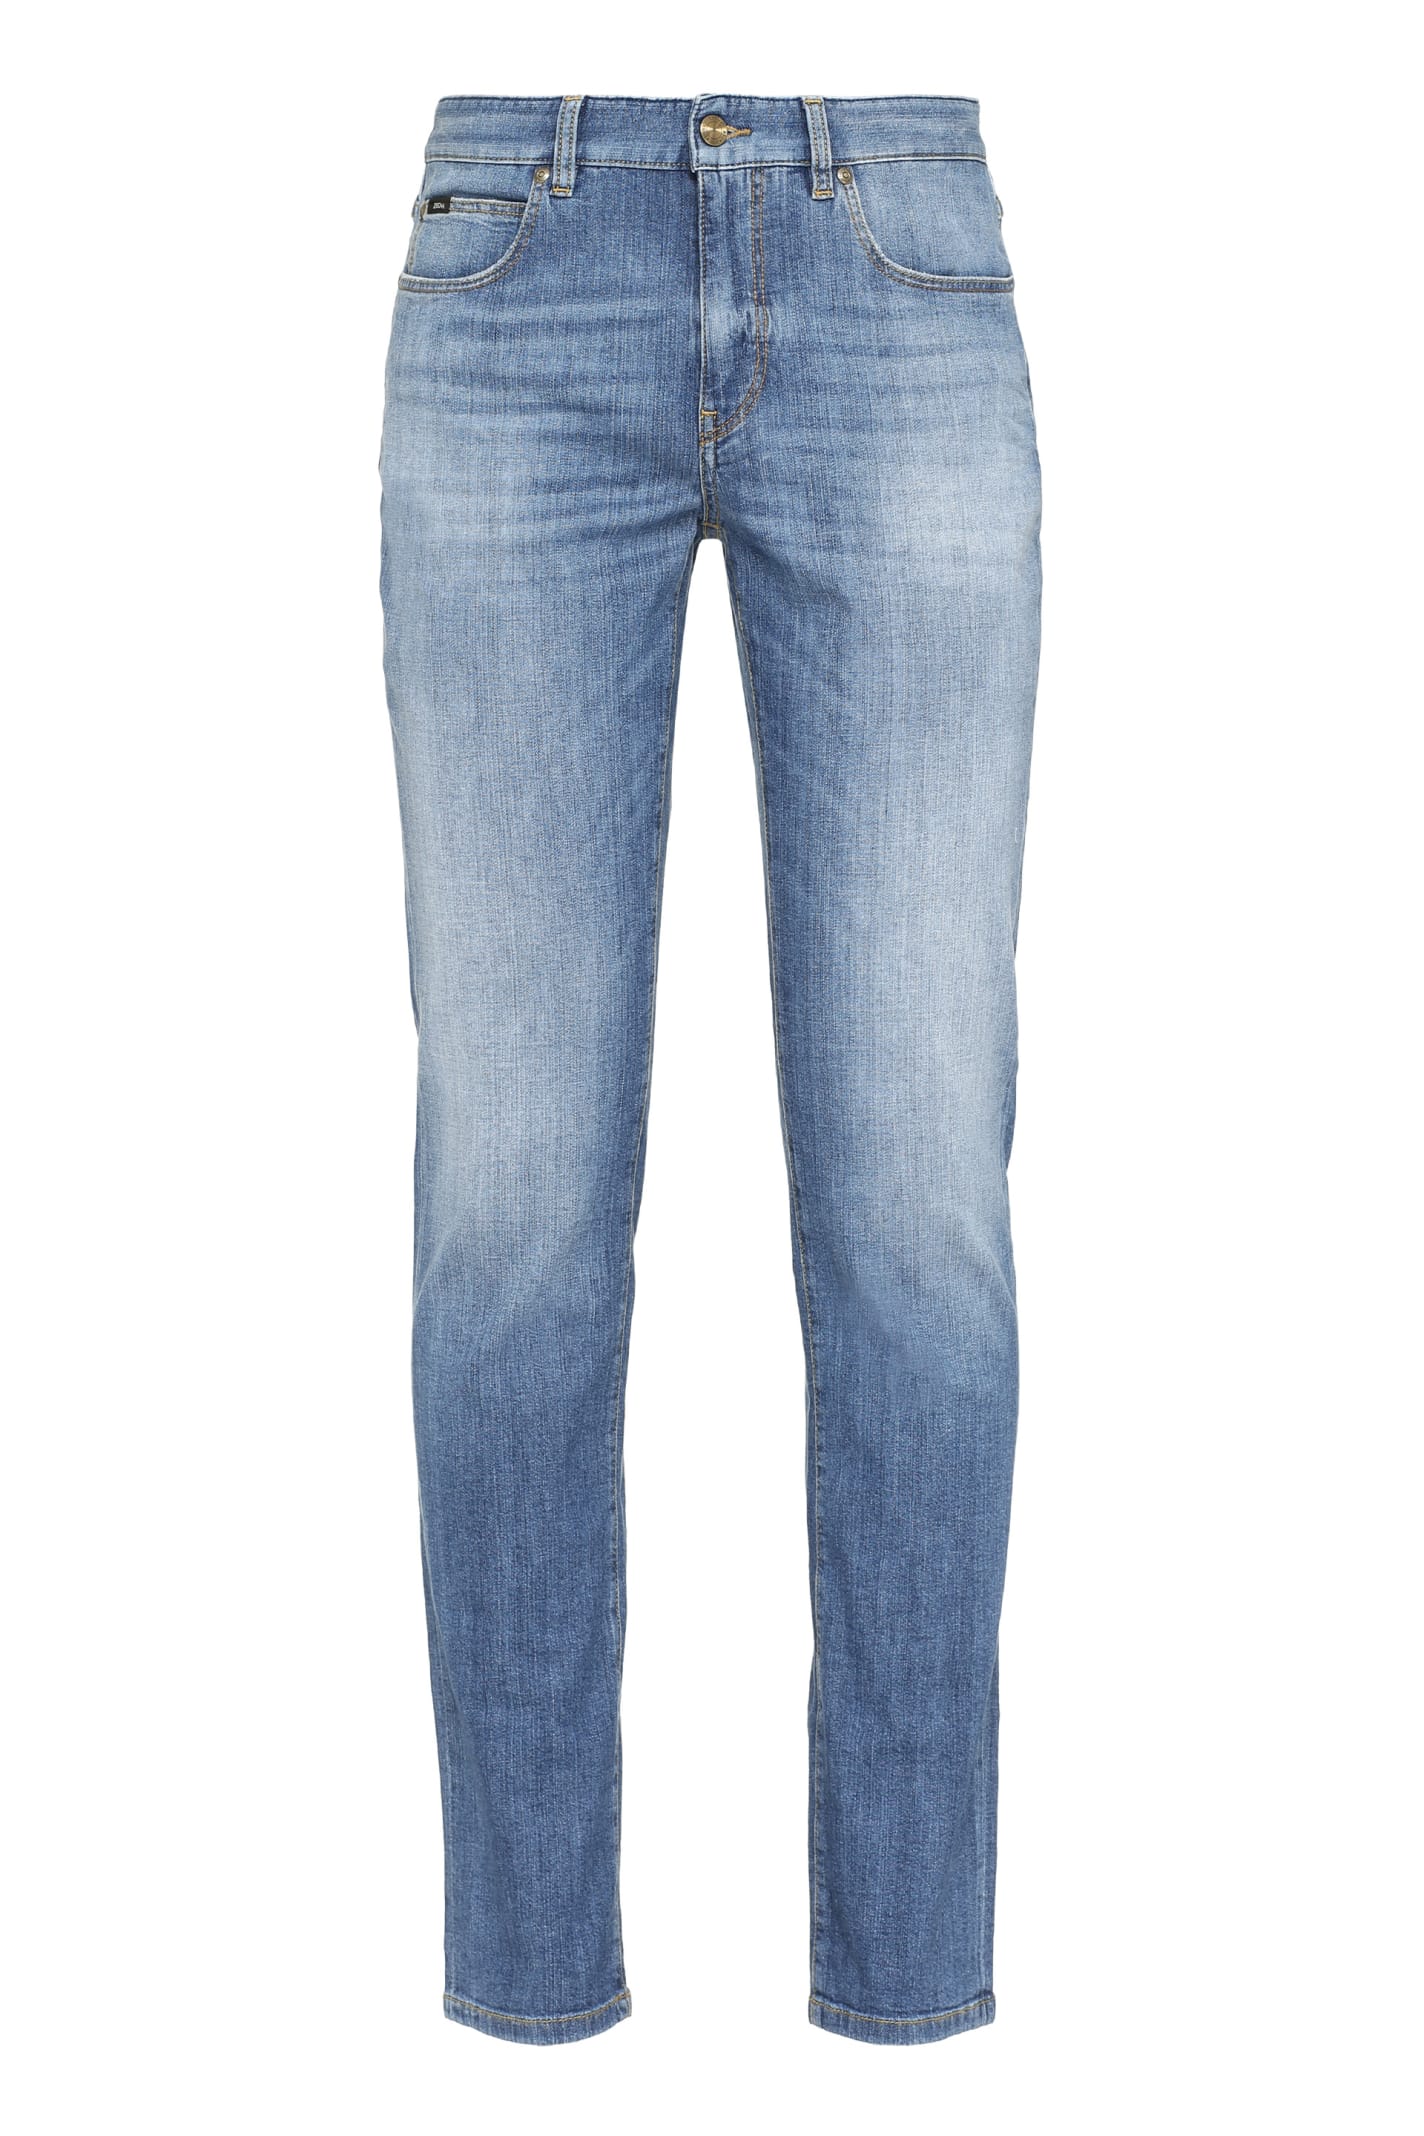 Z Zegna 5-pocket Slim Fit Jeans